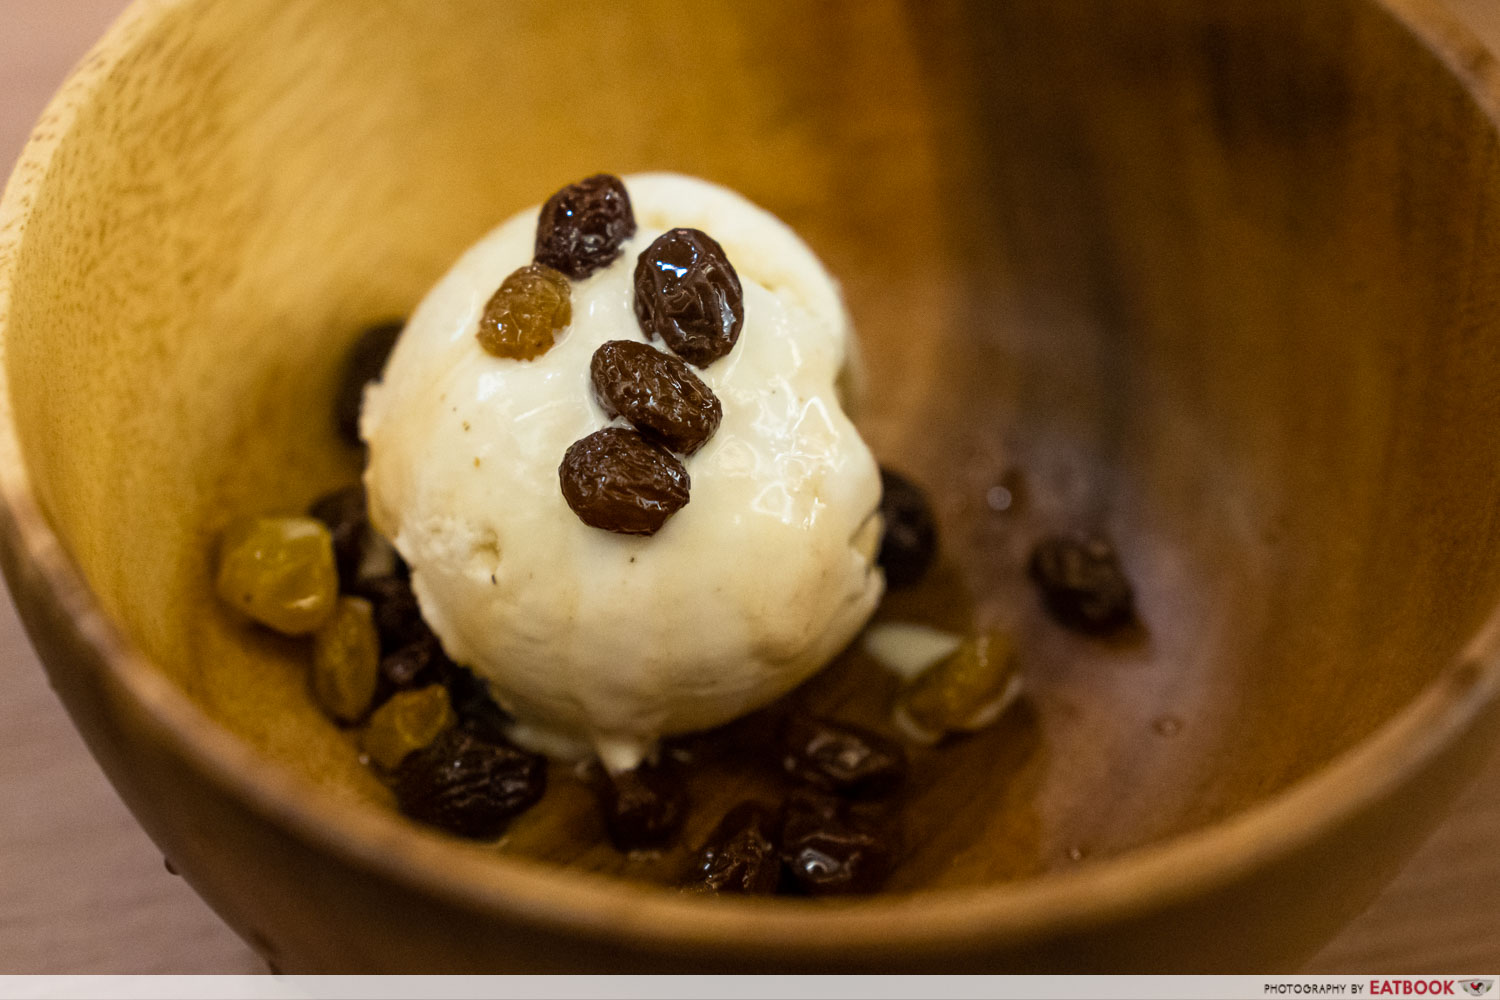 ume san 100 - yamazaki umeshu & raisin vanilla gelato